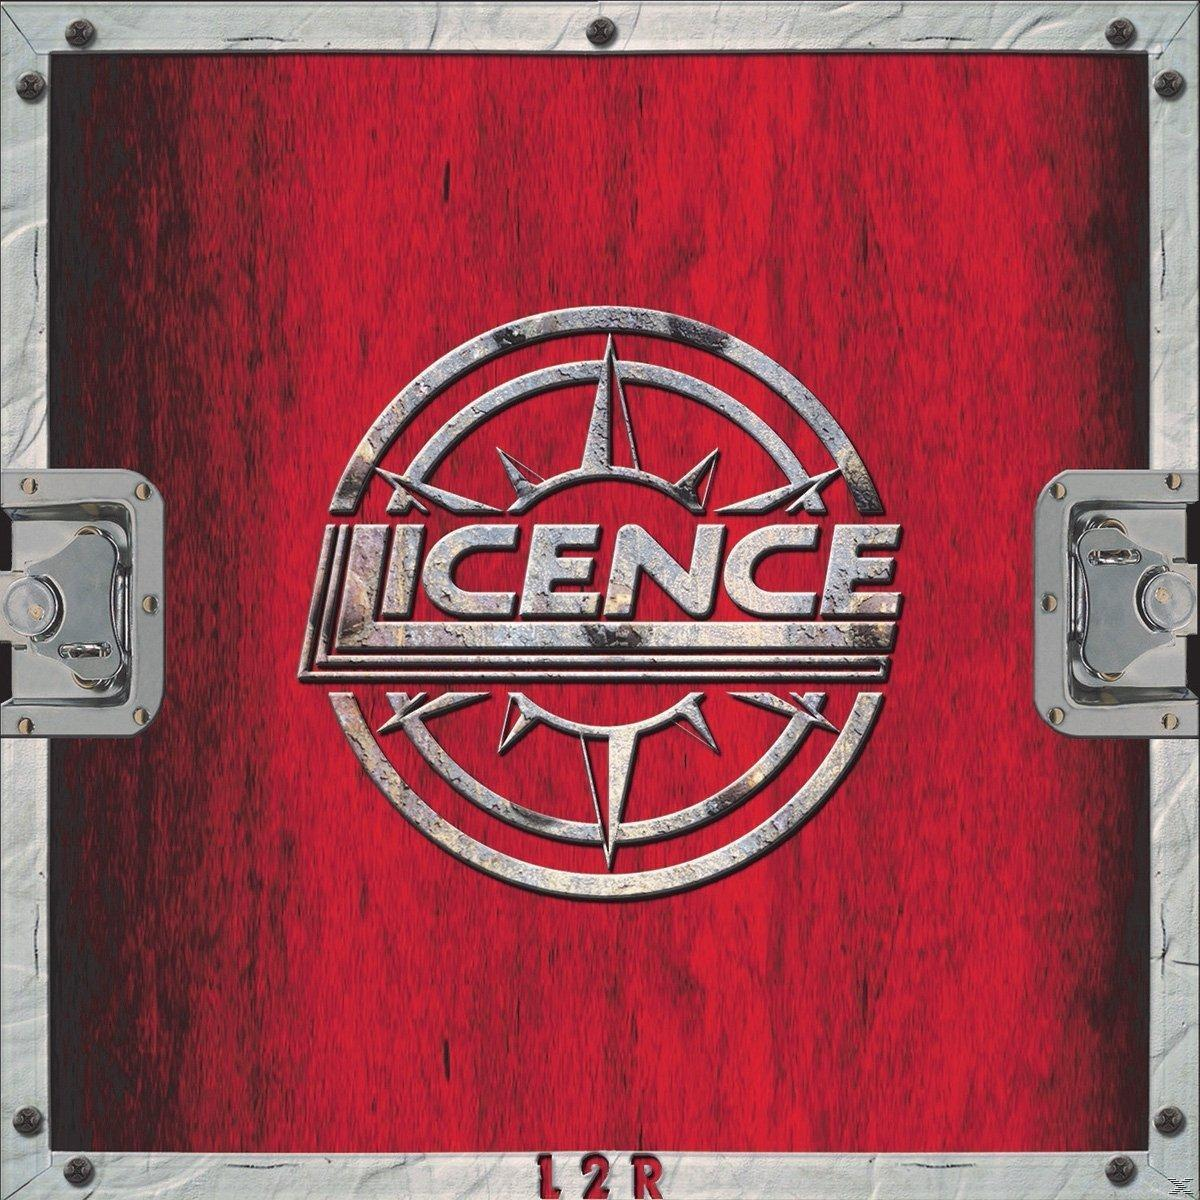 Licence 2 (Vinyl) Rock Licence - - (Vinyl)